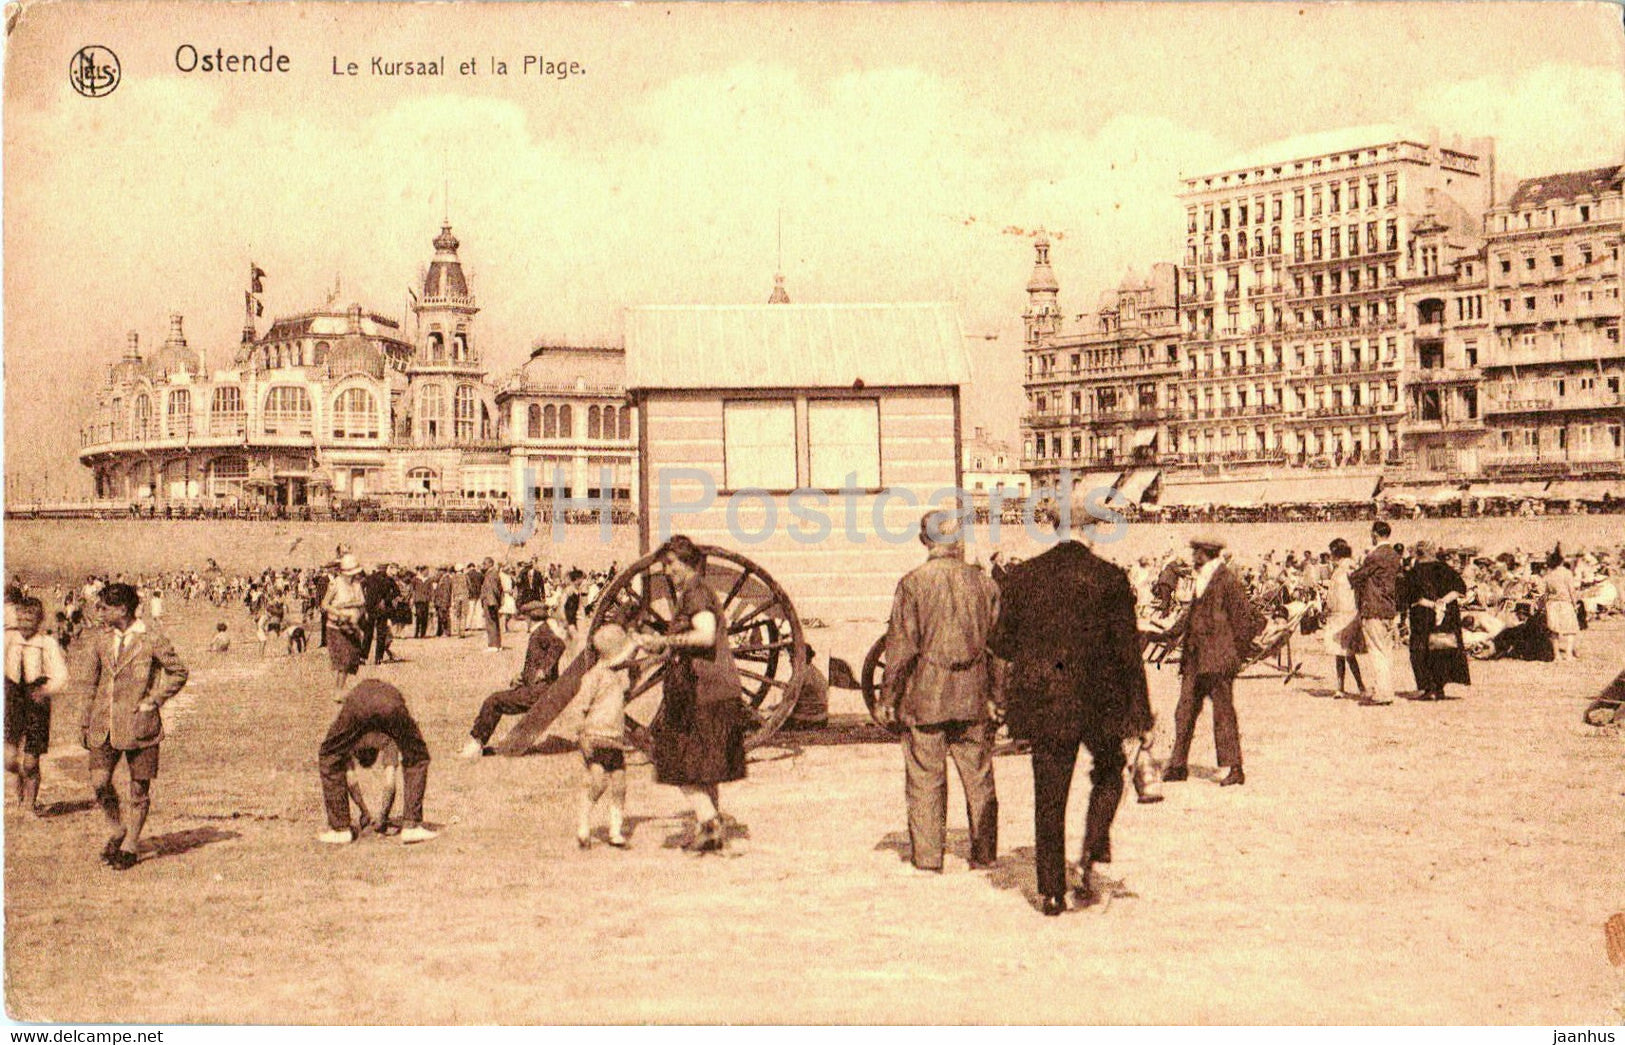 Ostende - Oostende - Le Kursaal et la Plage - beach - old postcard - 1921 - Belgium - used - JH Postcards